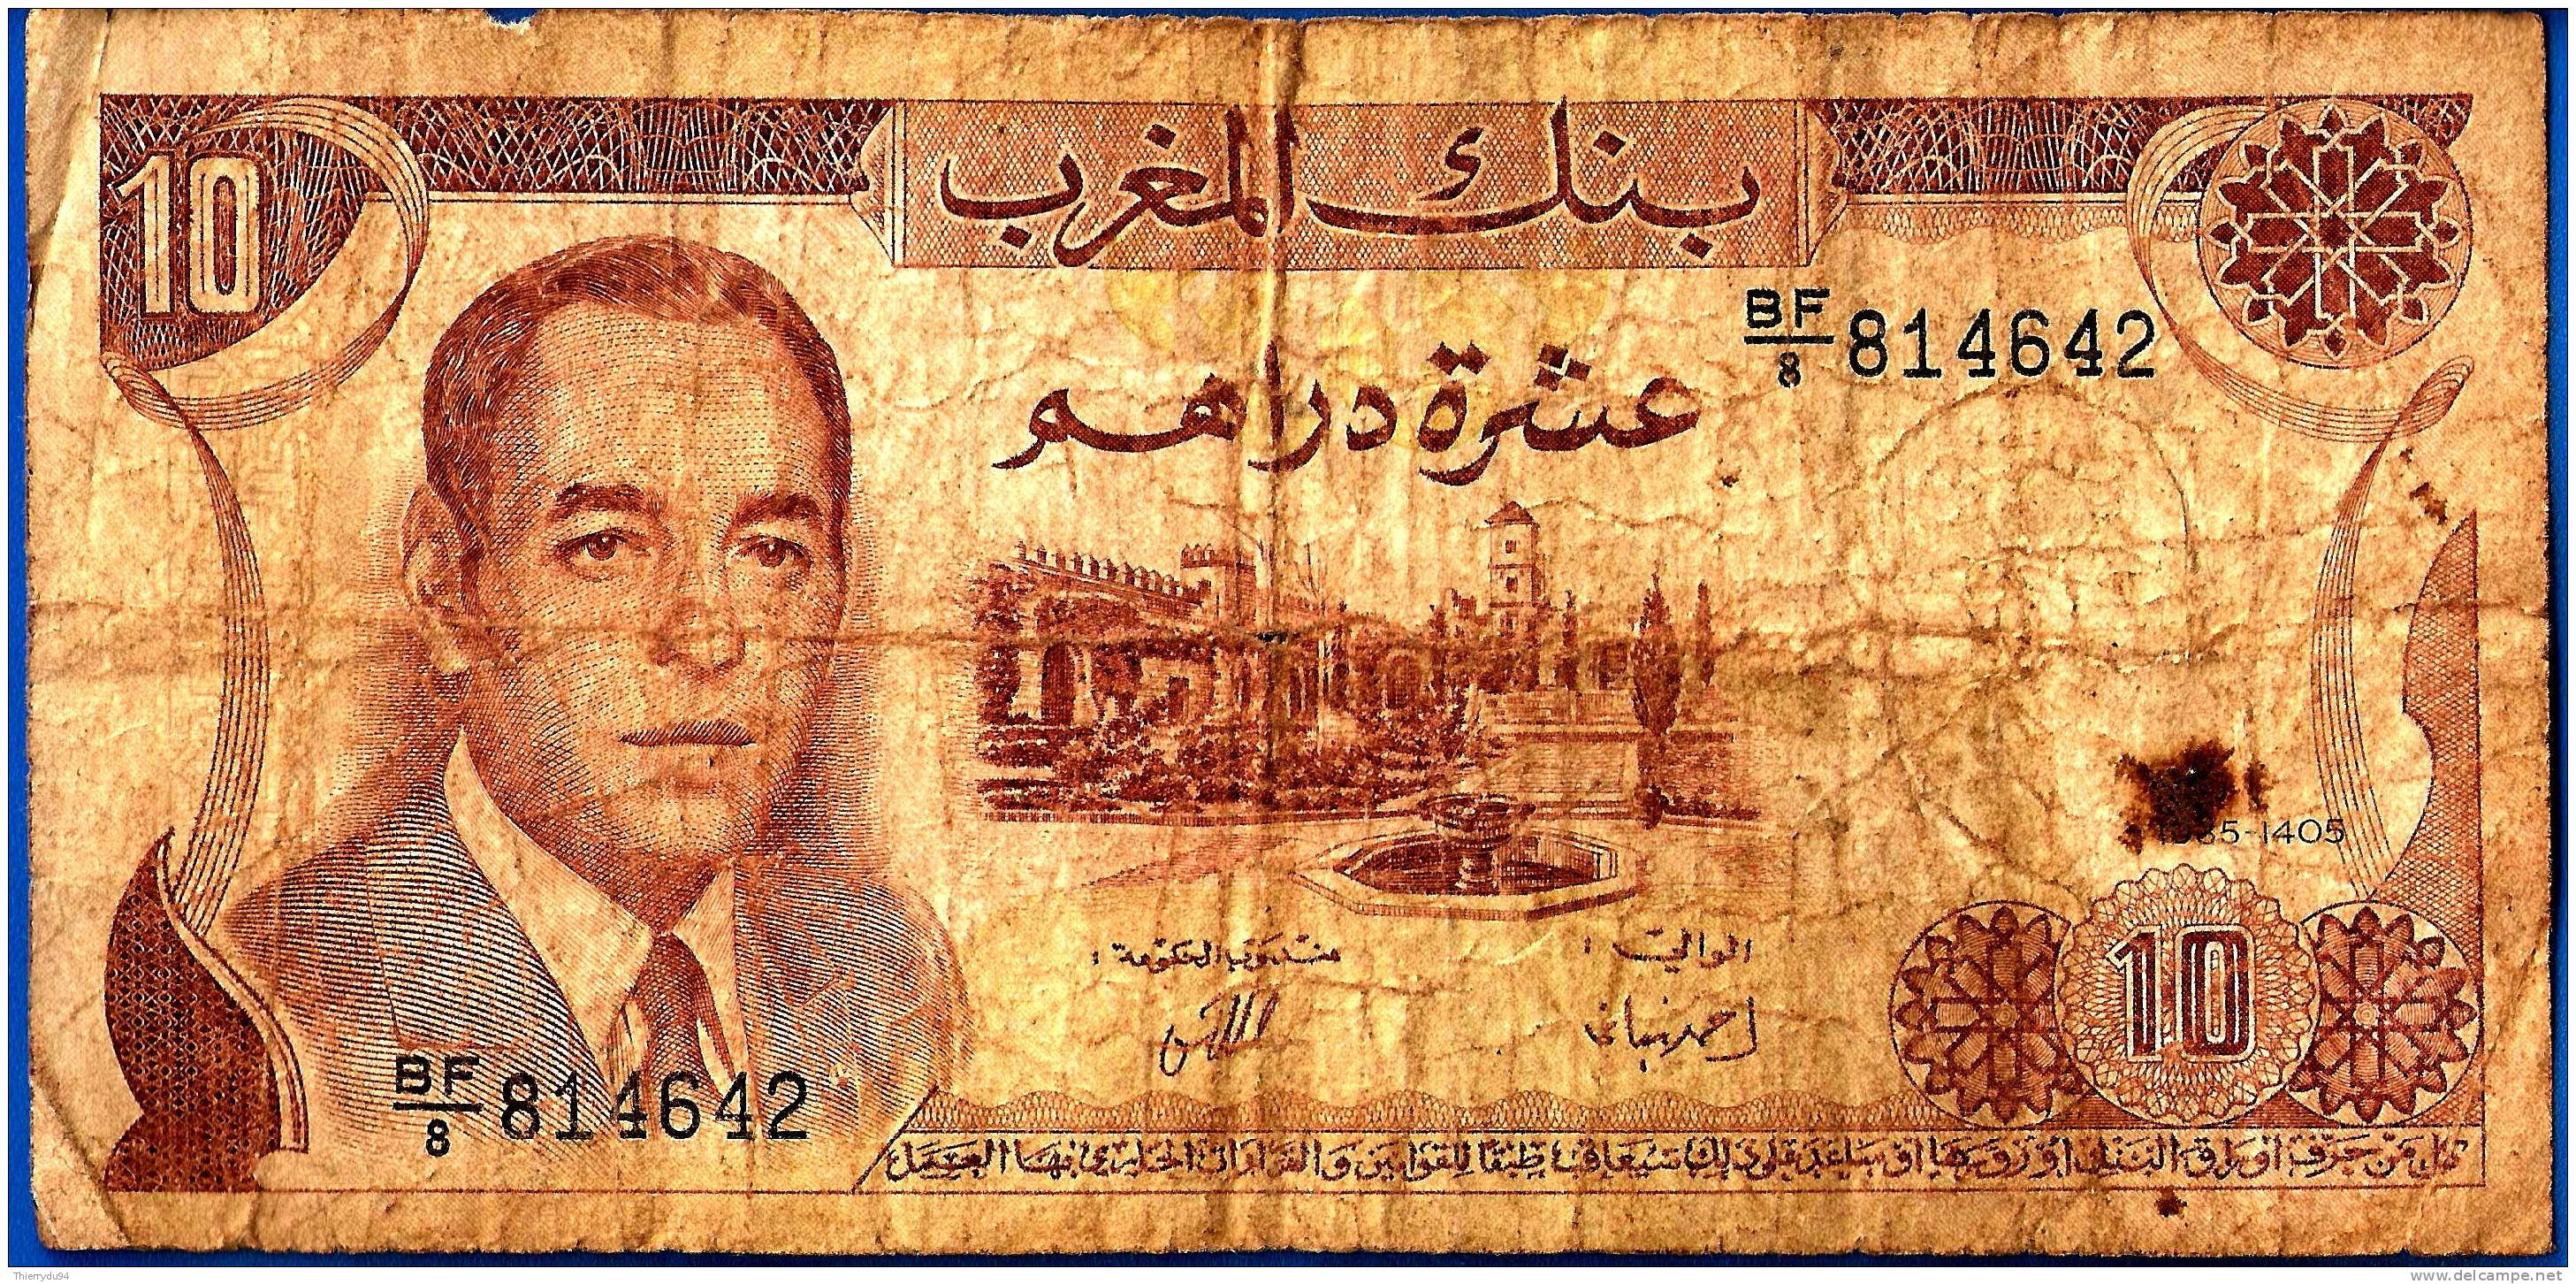 Maroc 10 Dirhams 1985 Signature 9 Morocco Afrique Africa Paypal Moneybookers OK - Morocco